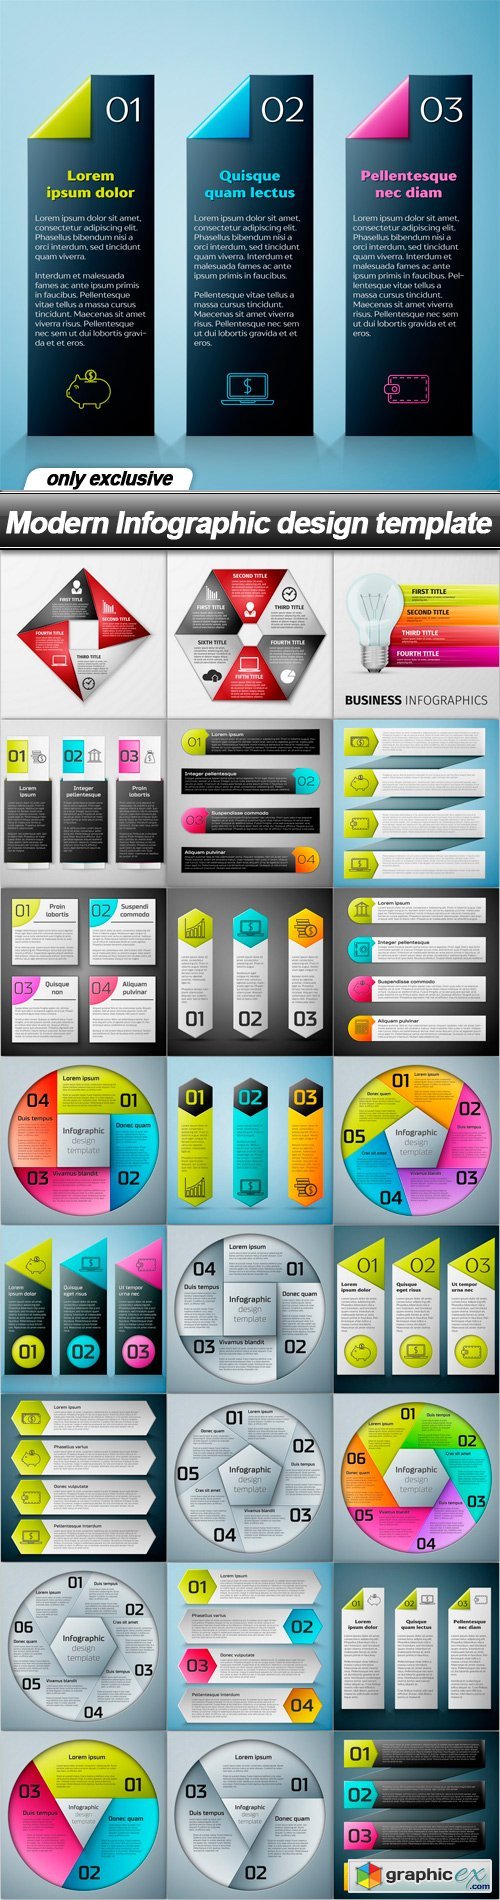 Modern Infographic design template - 25 EPS